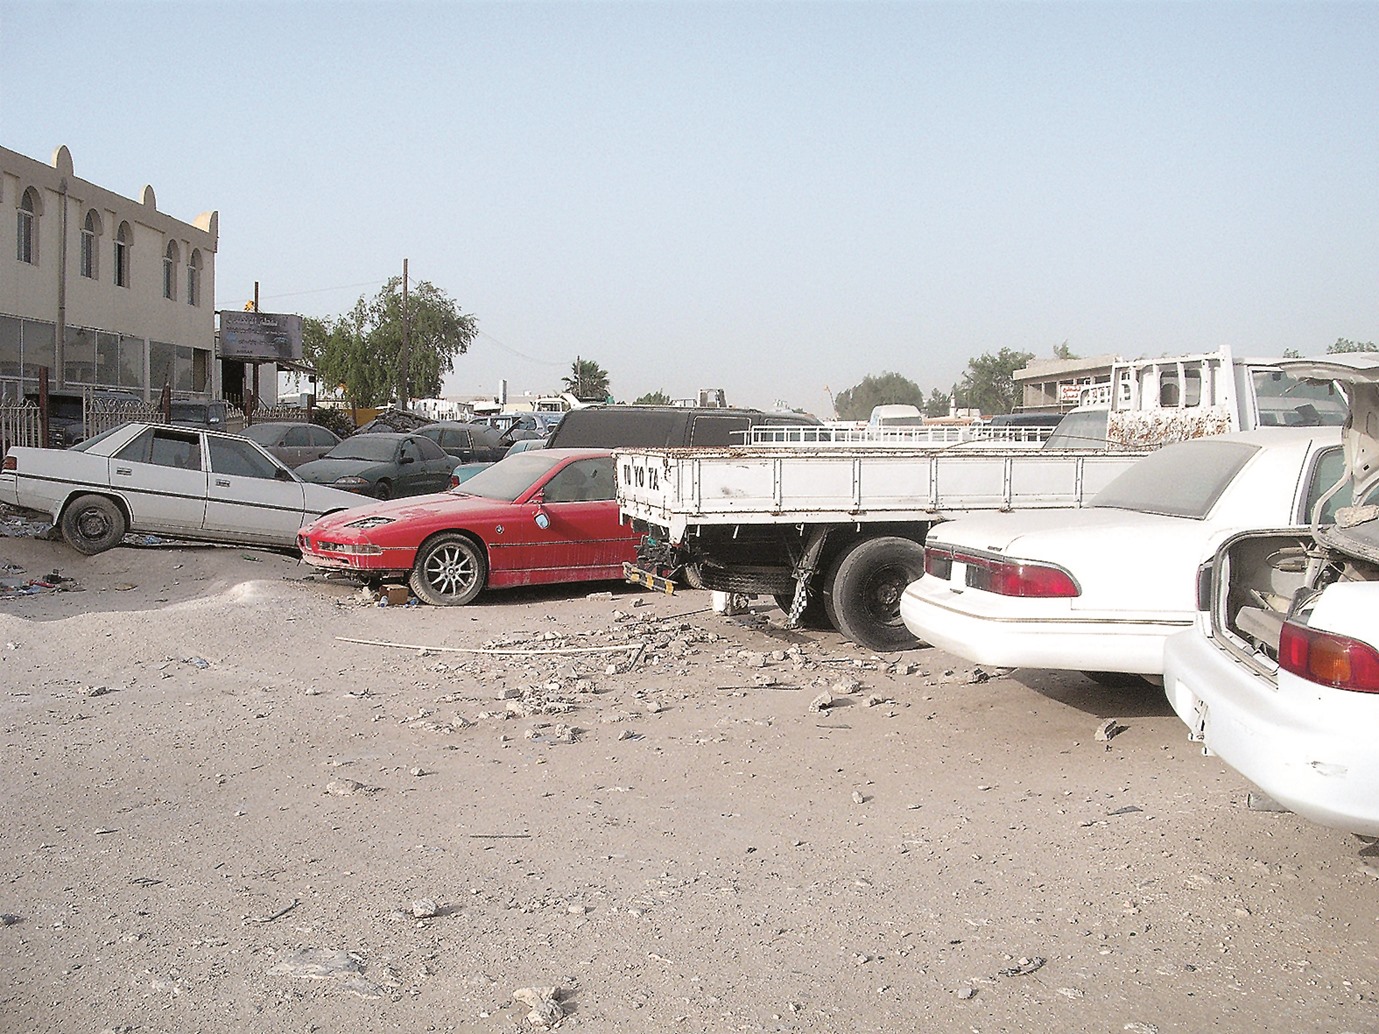 Qatar: Drive to Seize Abandoned & Violating Vehicles